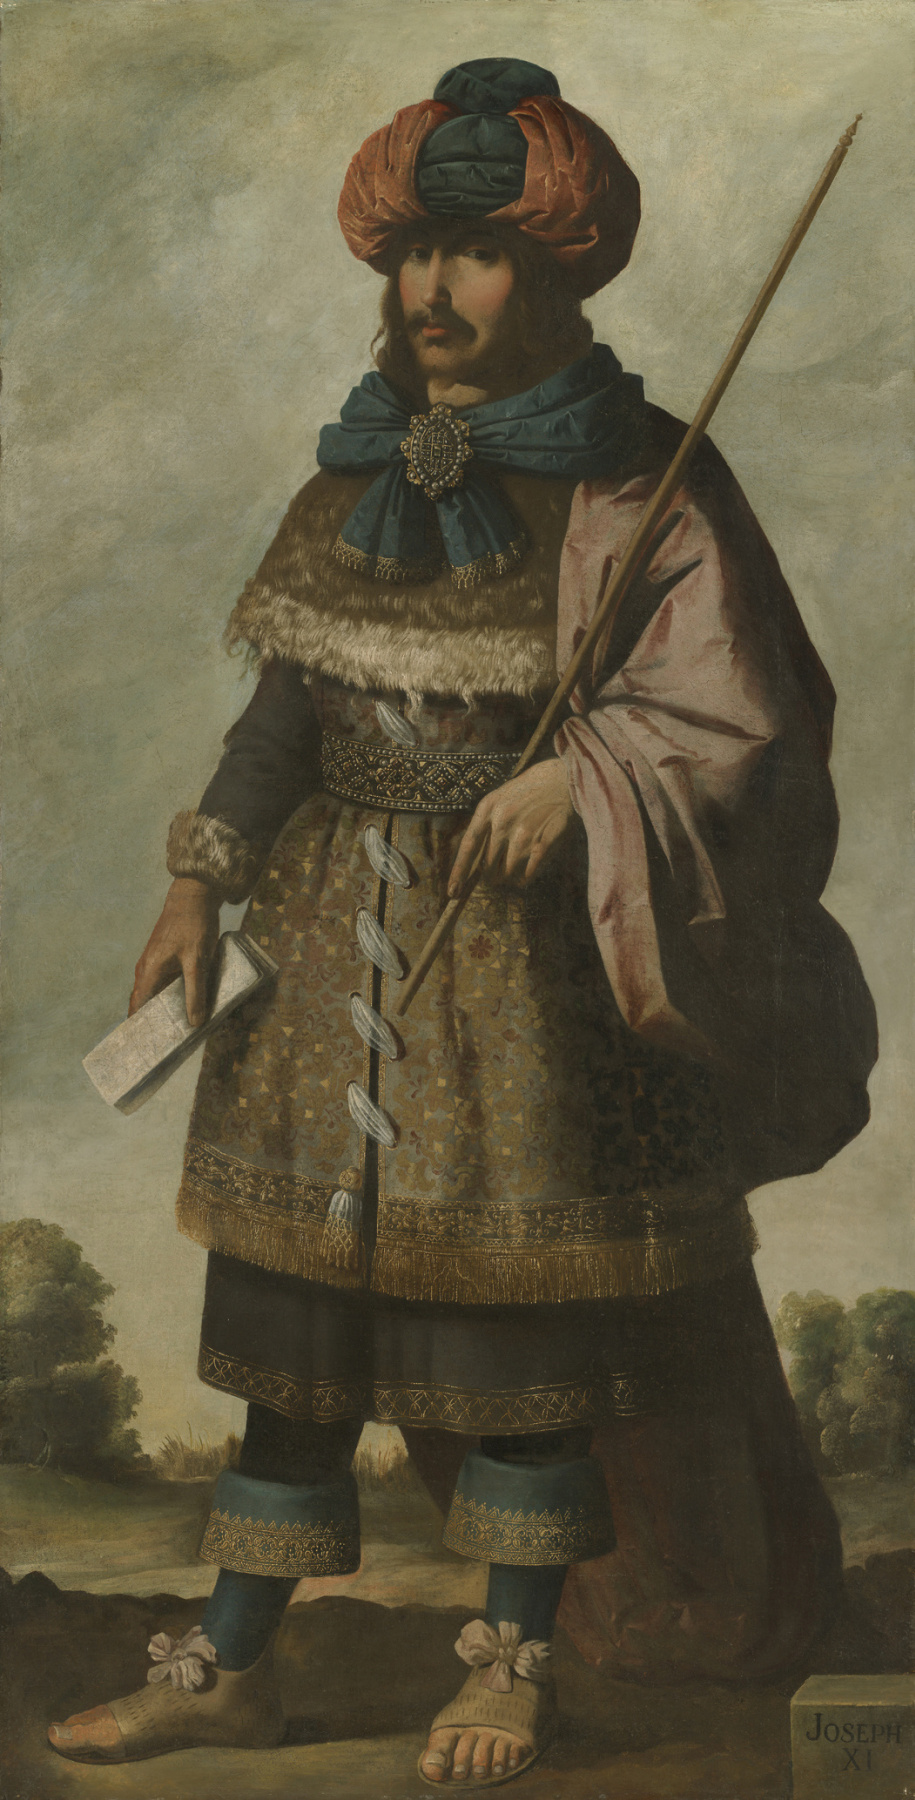 Francisco de Zurbaran. Joseph from the series "Jacob and his twelve sons"